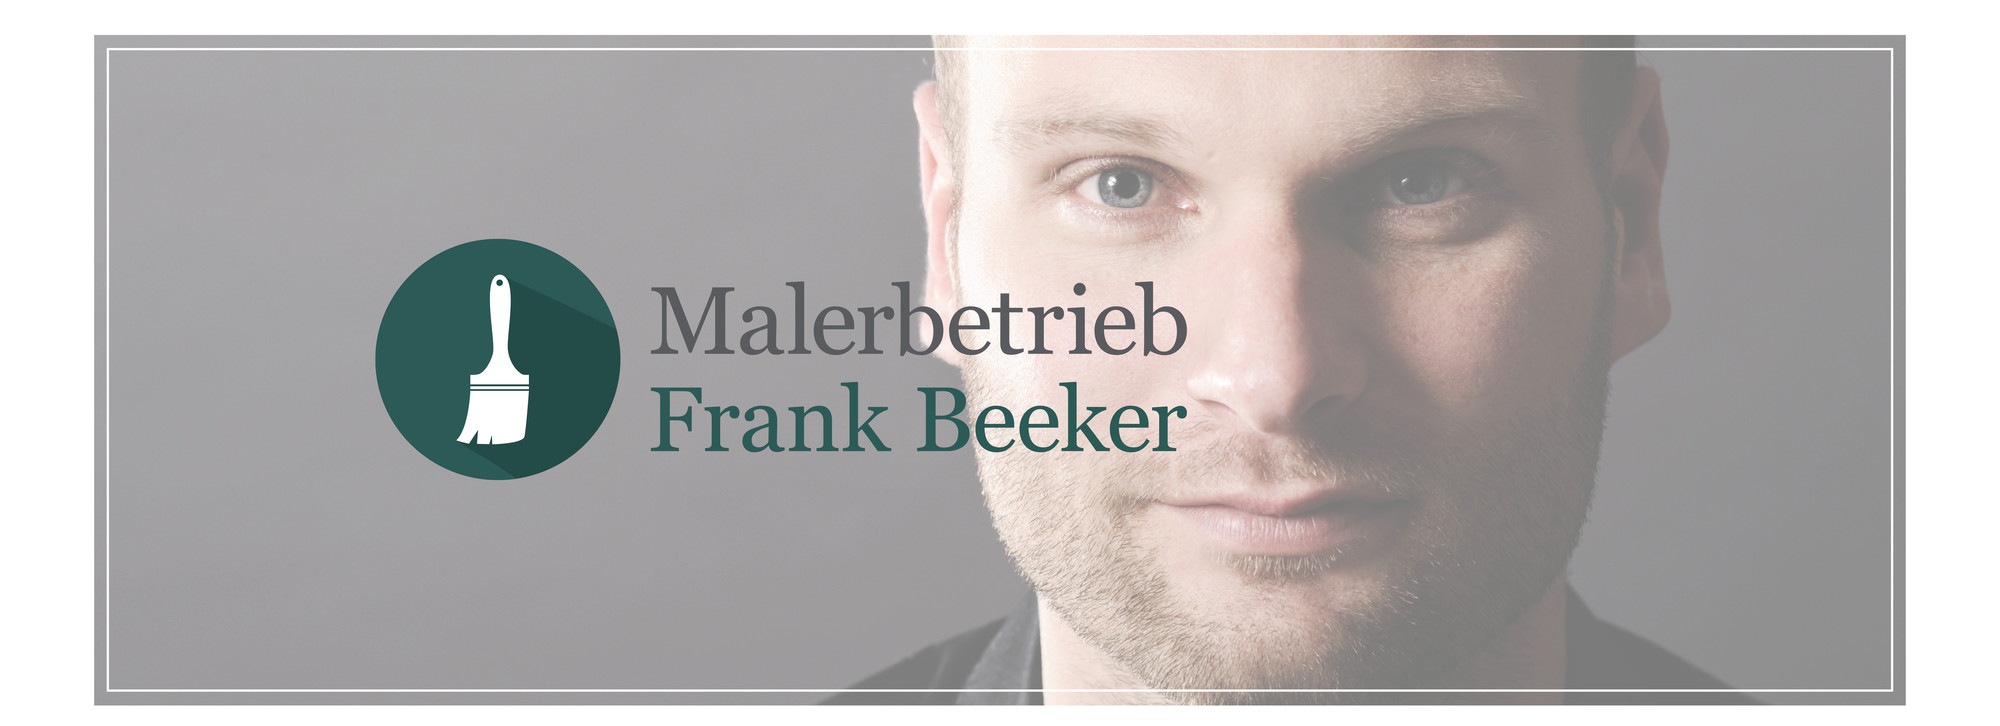 Malerbetrieb Frank Beeker